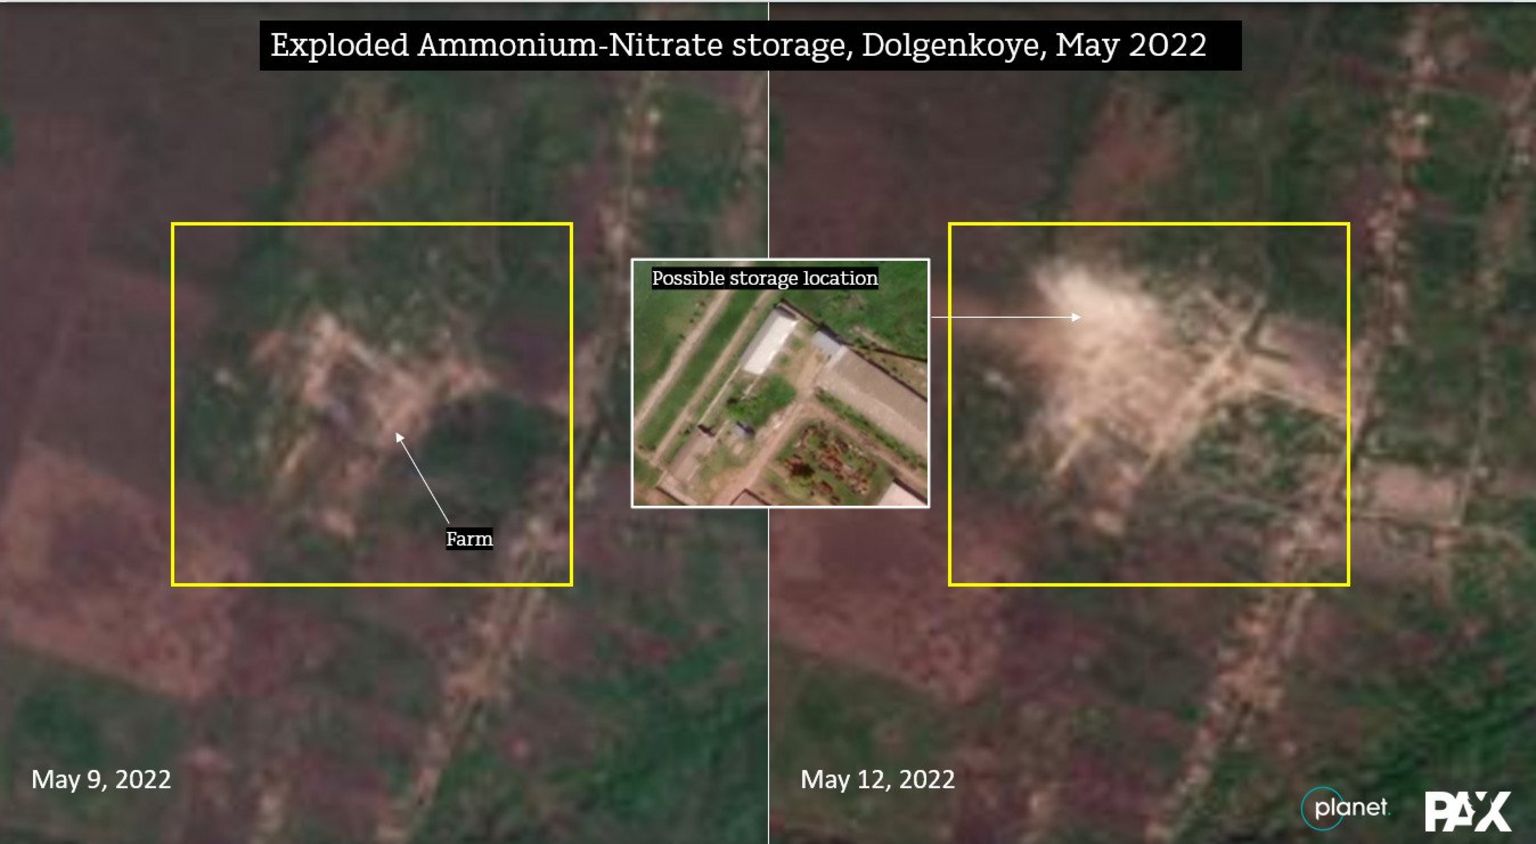 Satellite images of a farm in Dolgenkoe